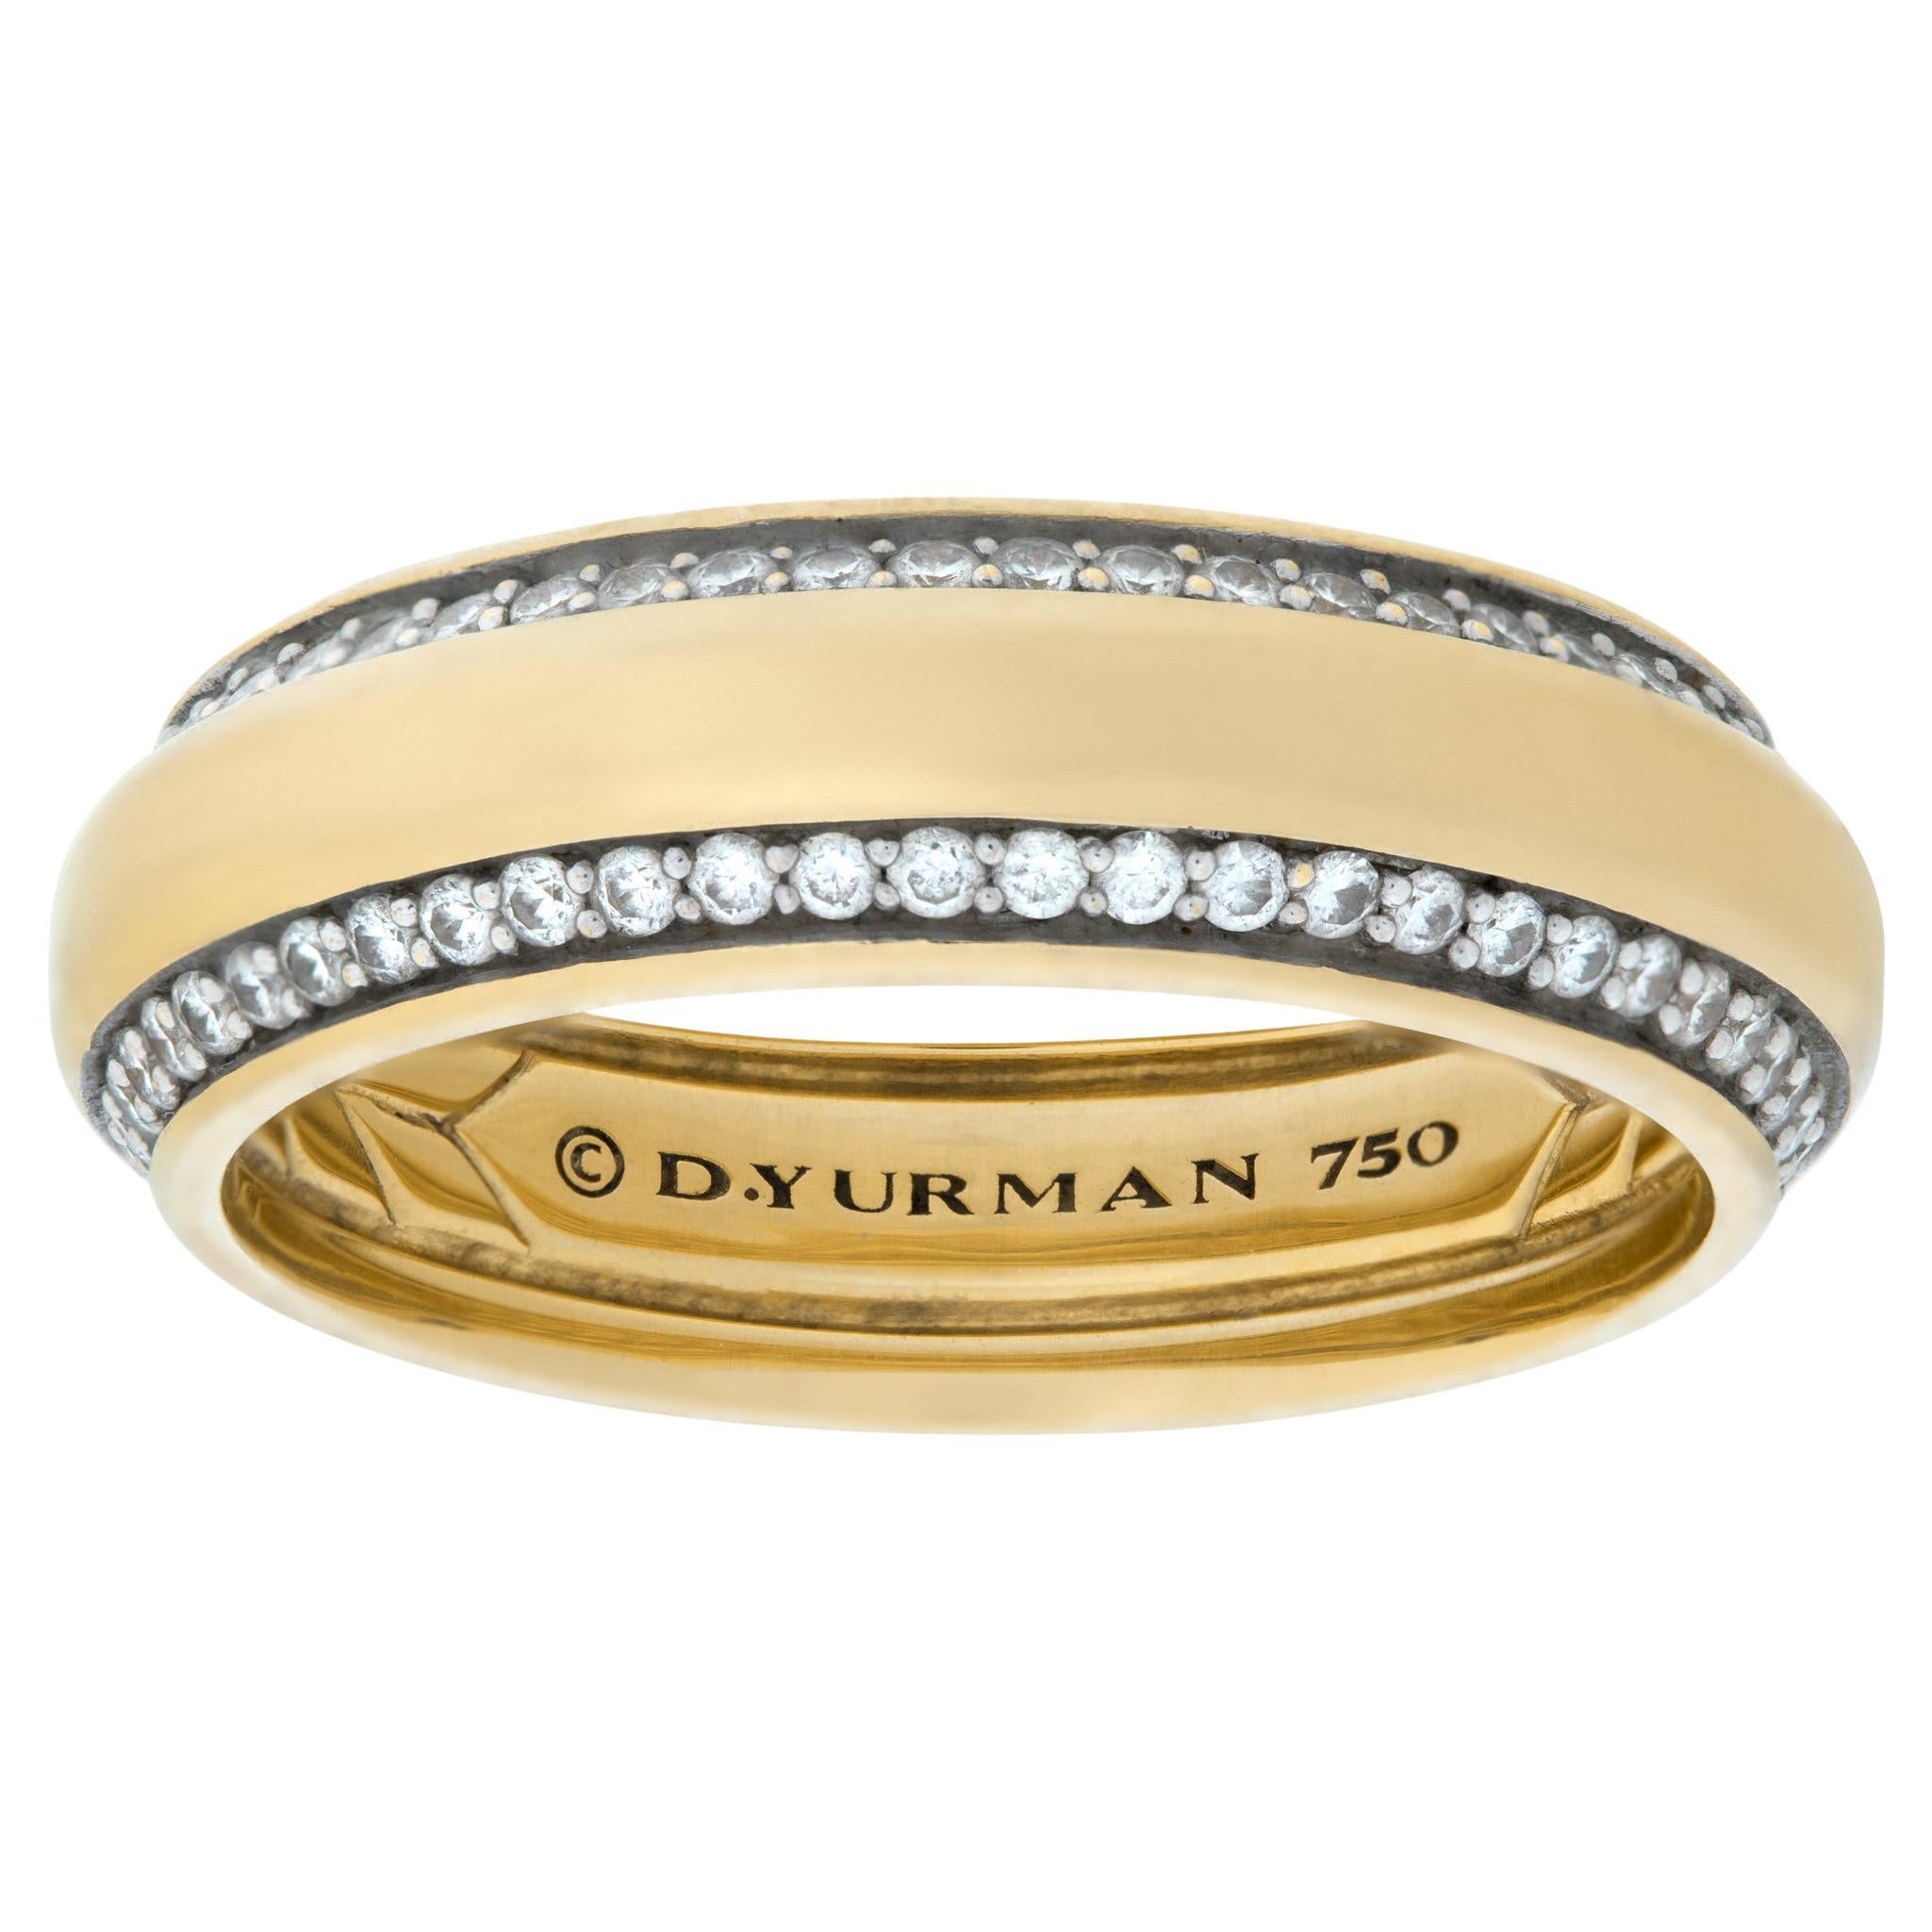 David Yurman beveled band ring in yello gold with 0.67 carats in diamonds.